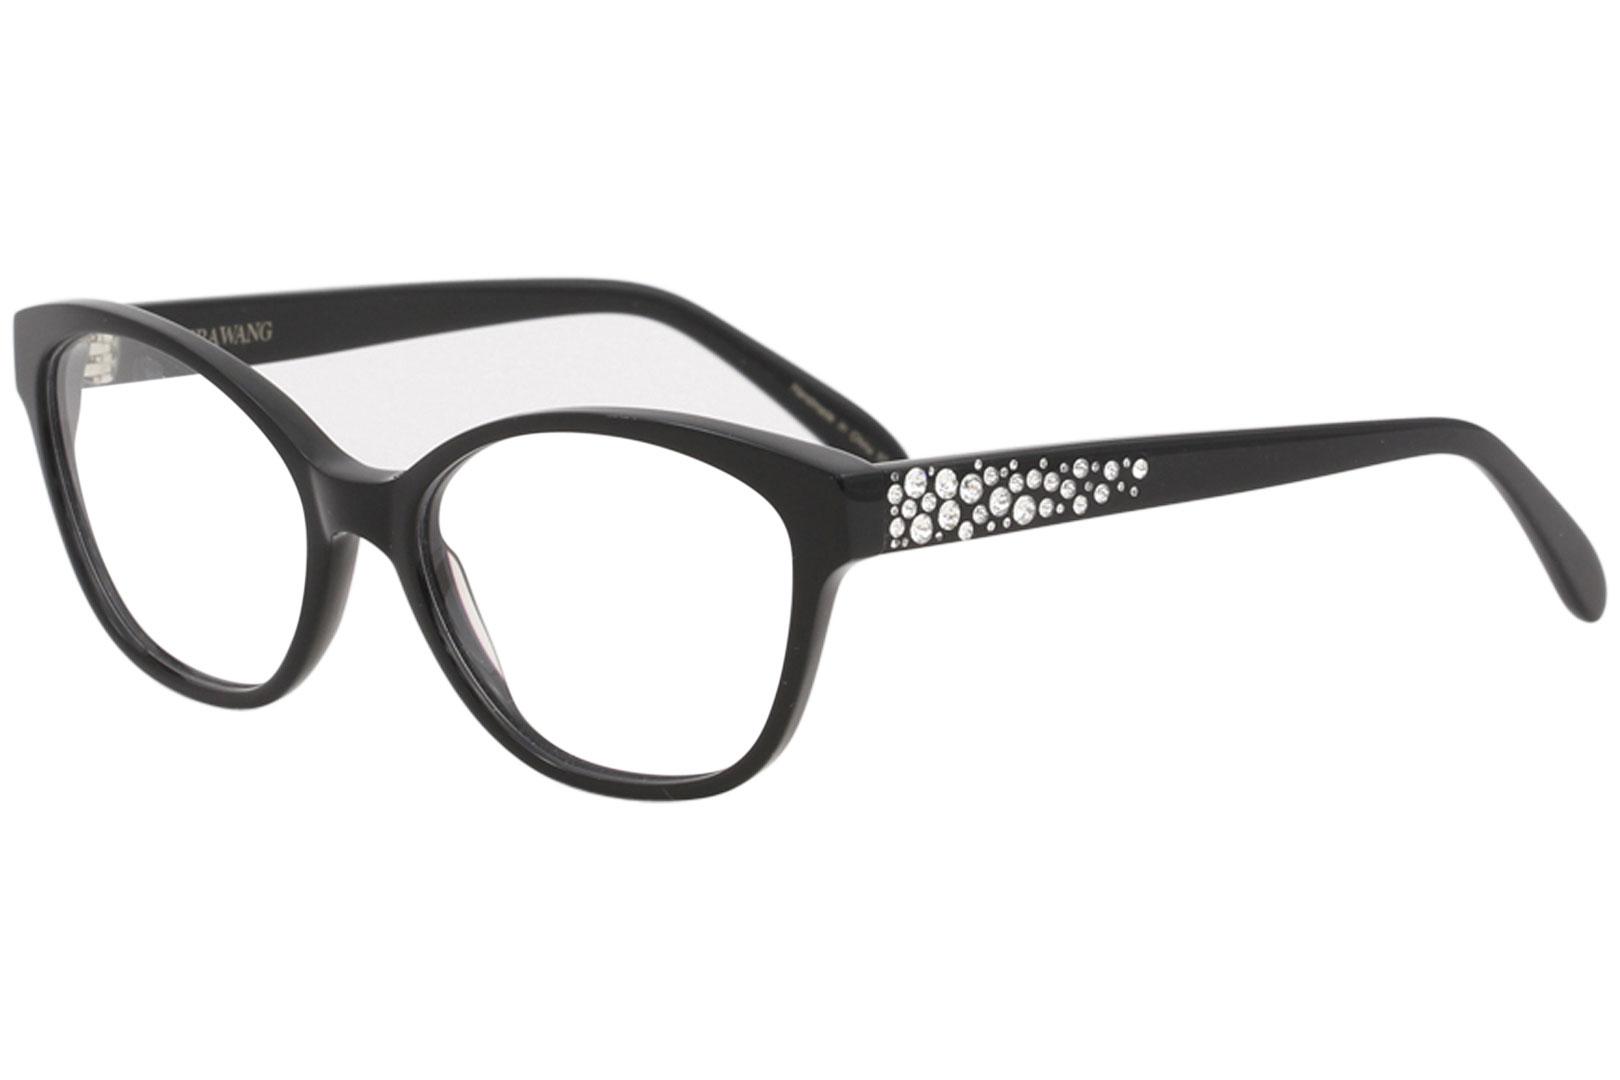 Women's Eyeglasses  BK Black Full Rim Optical Frame 52mm - Black - Lens 52 Bridge 16 Temple 130mm - Vera Wang Taaffe